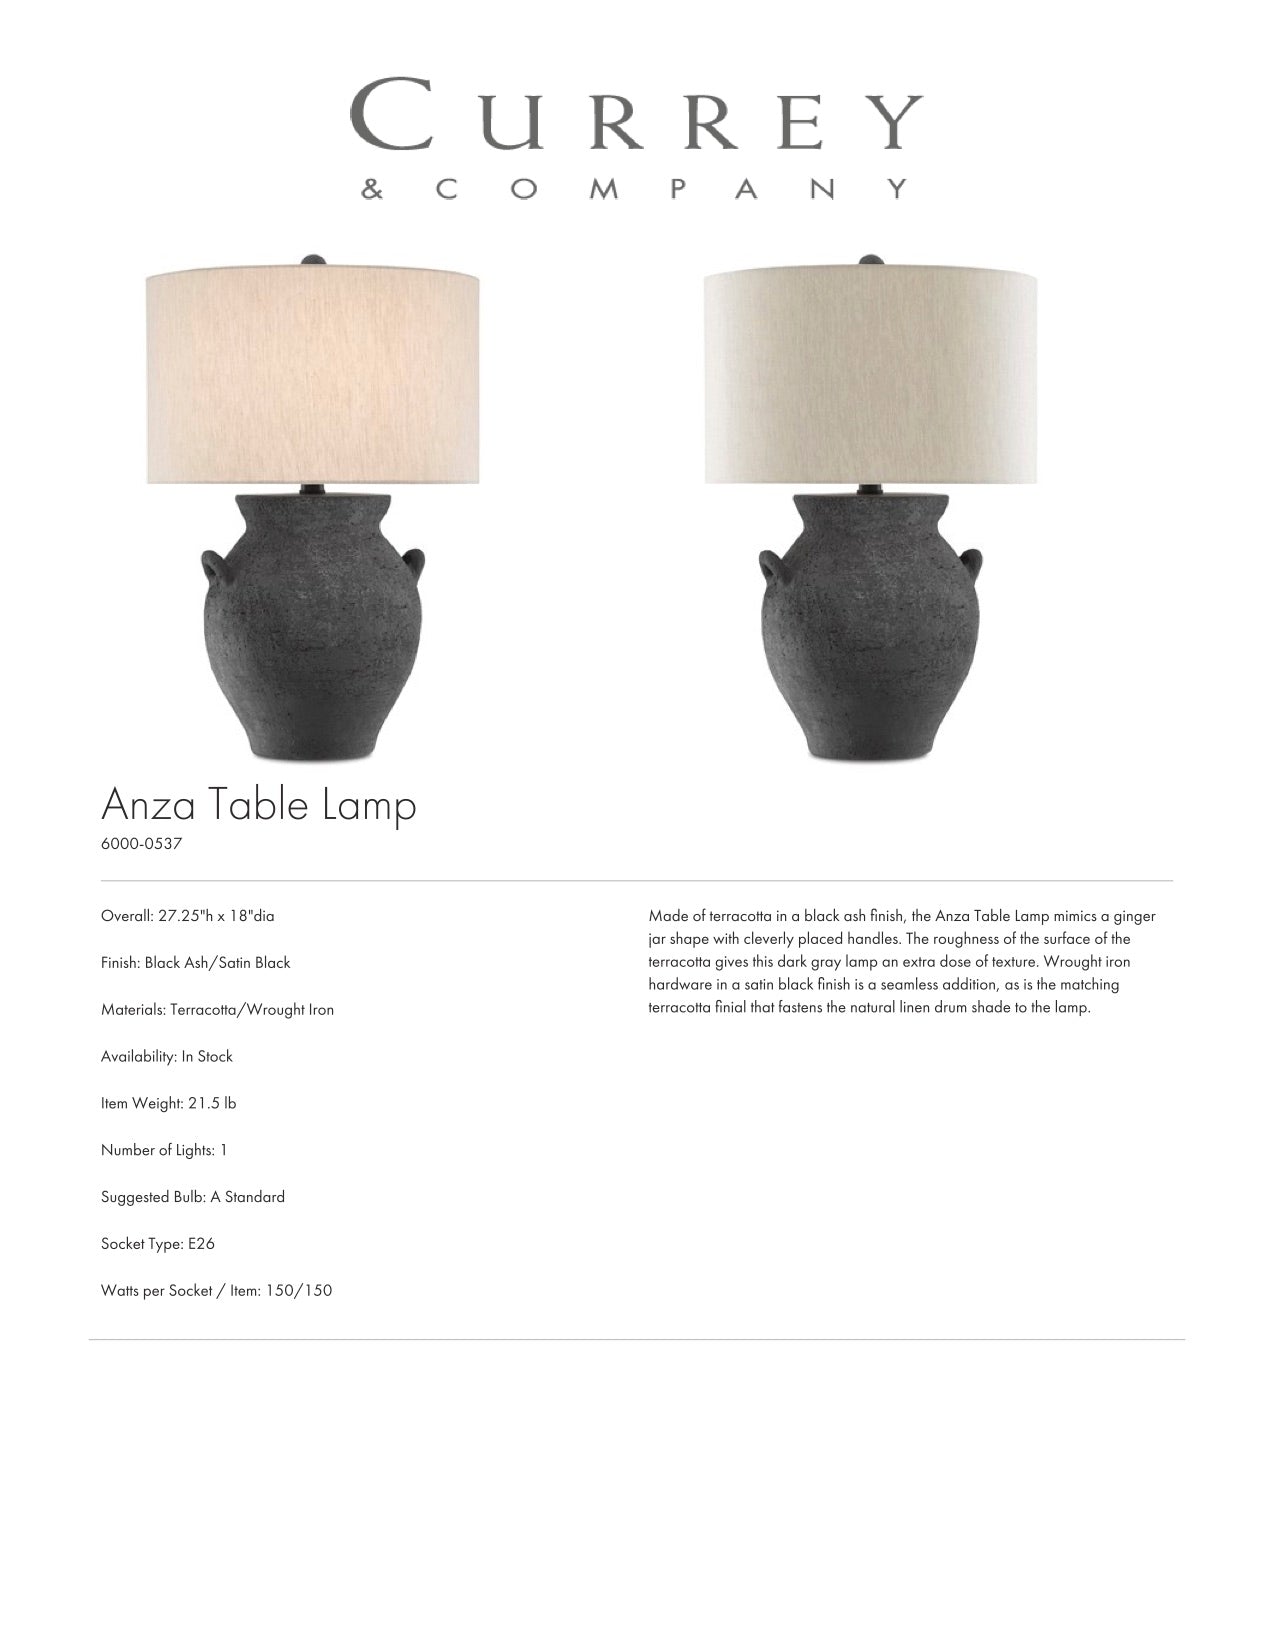 Currey & Company Anza Table Lamp Tearsheet